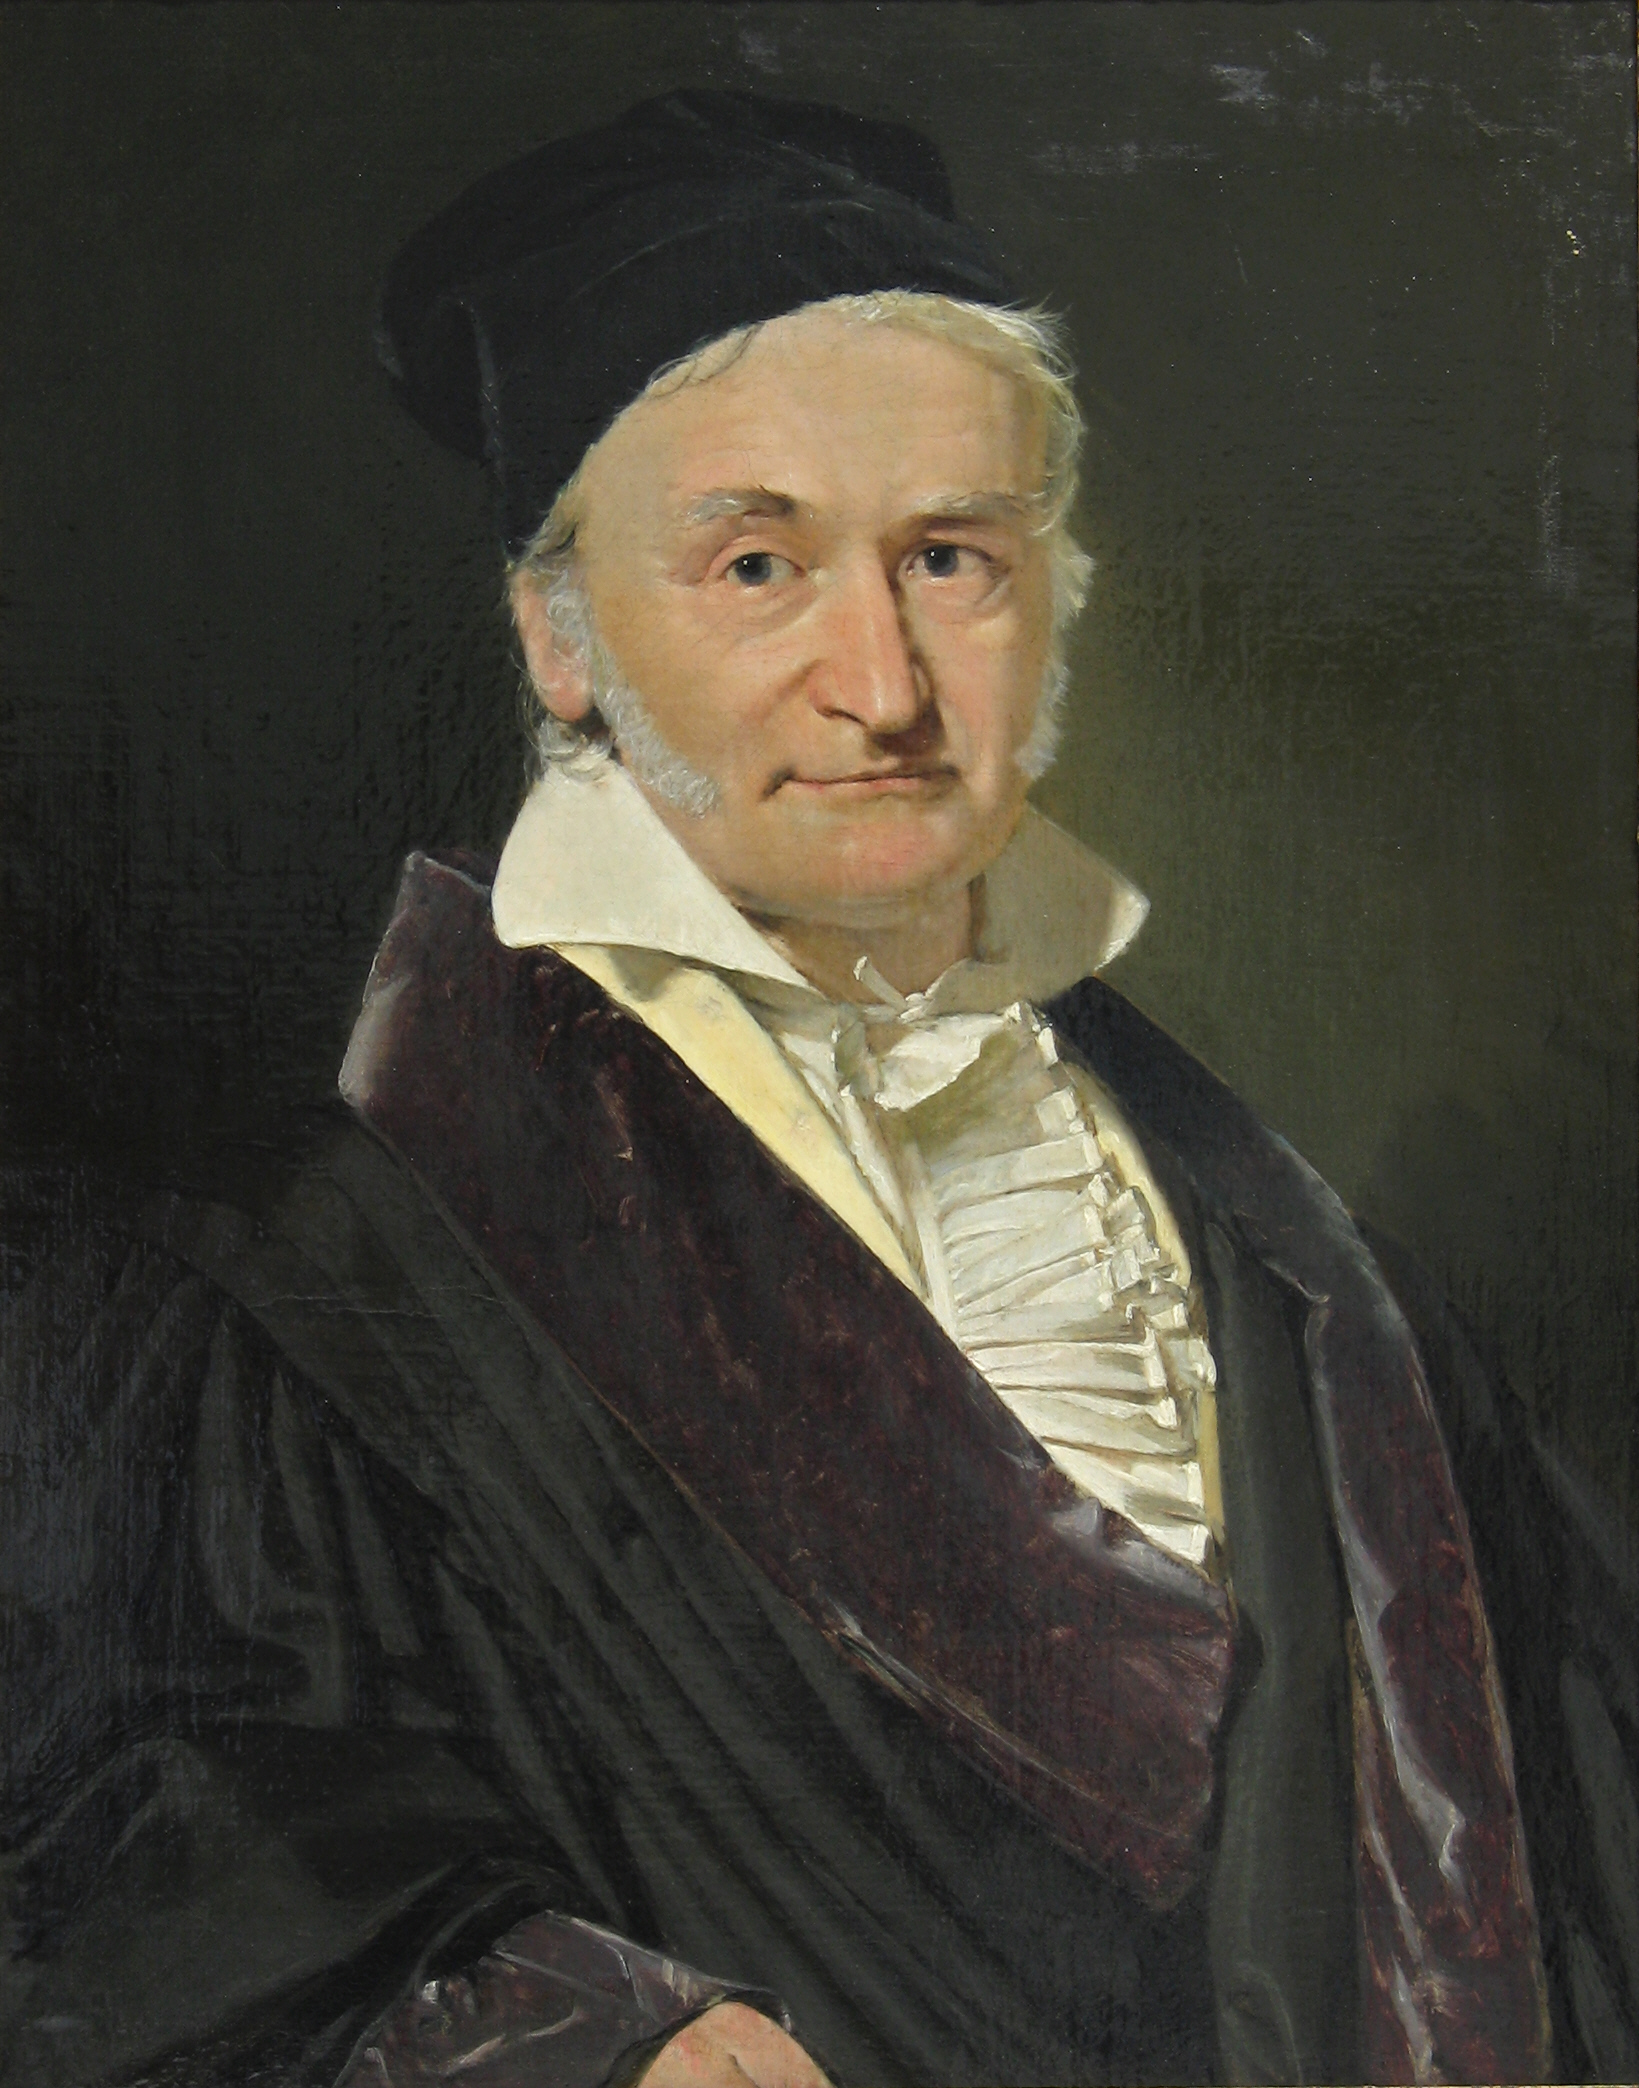 Carl_Friedrich_Gauss_1840_by_Jensen.jpg